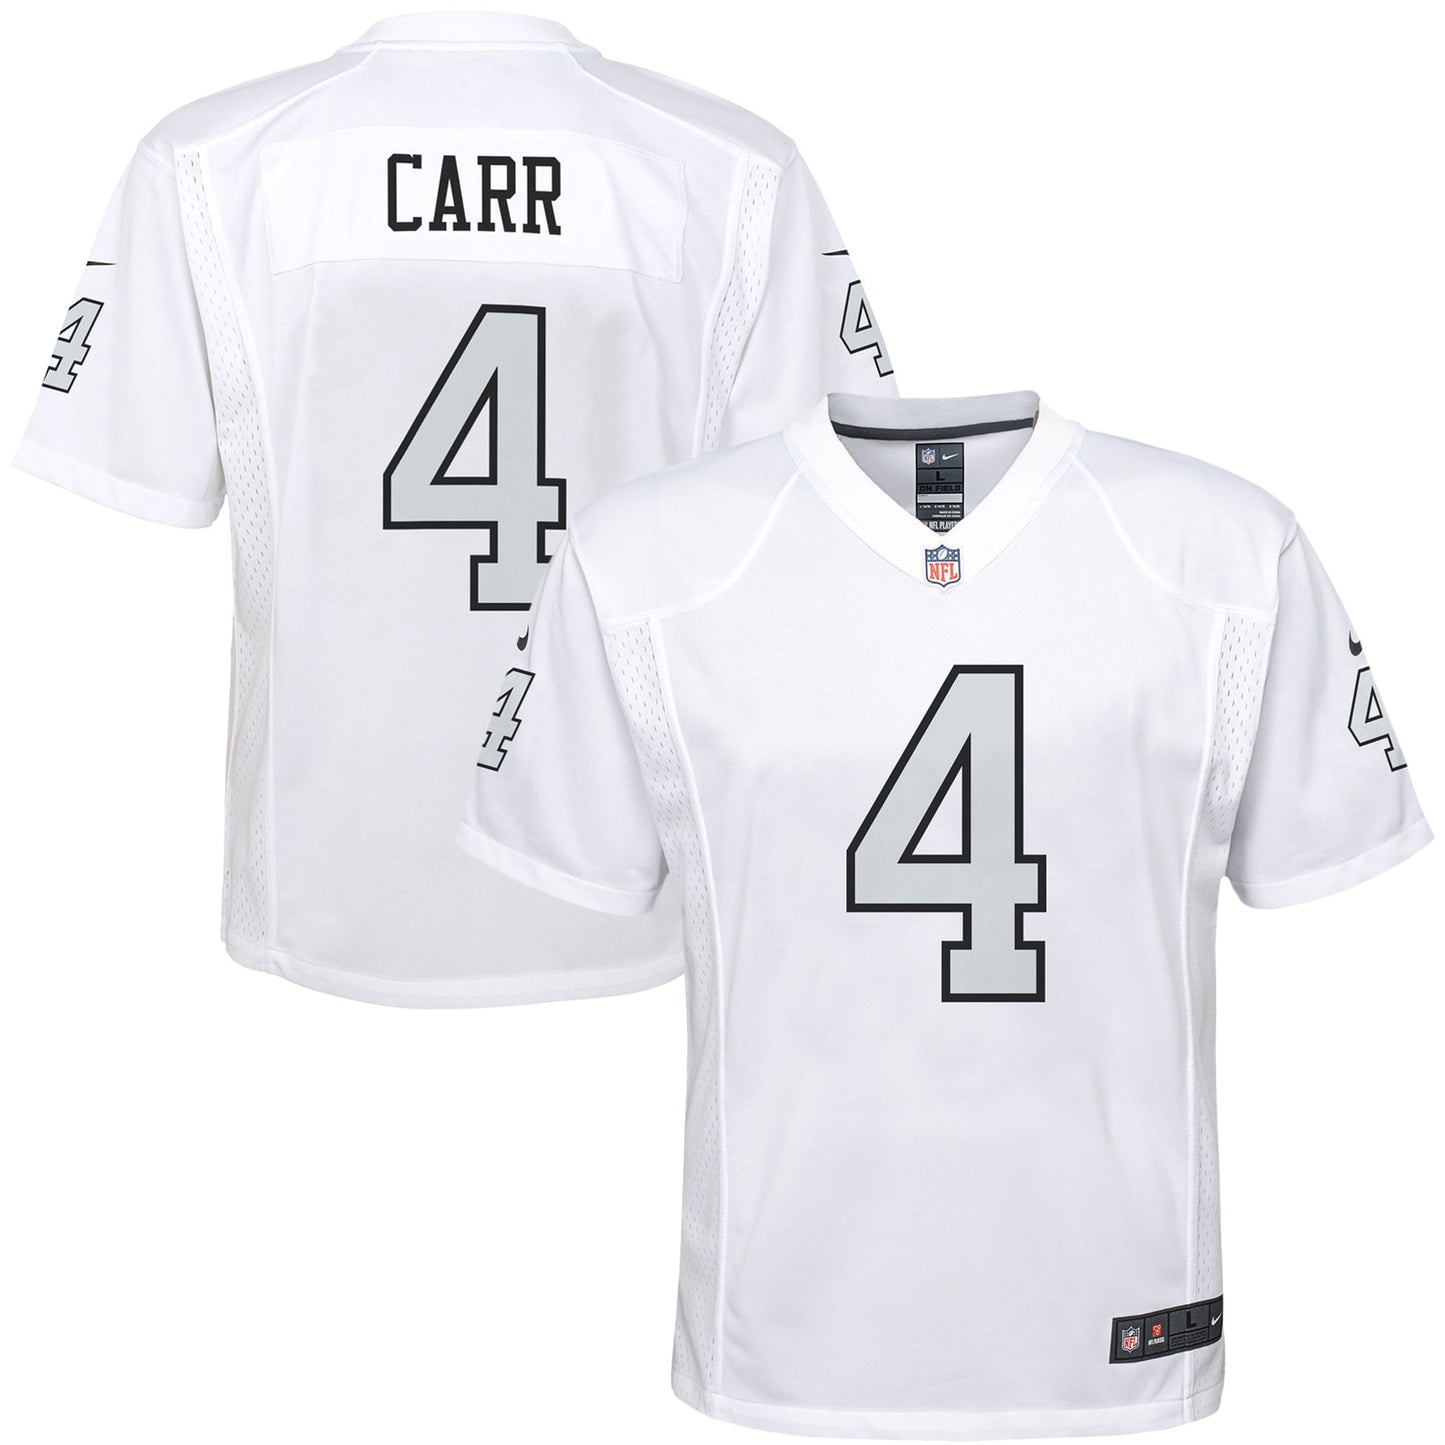 Derek Carr Las Vegas Raiders Nike Youth Color Rush Game Jersey - White